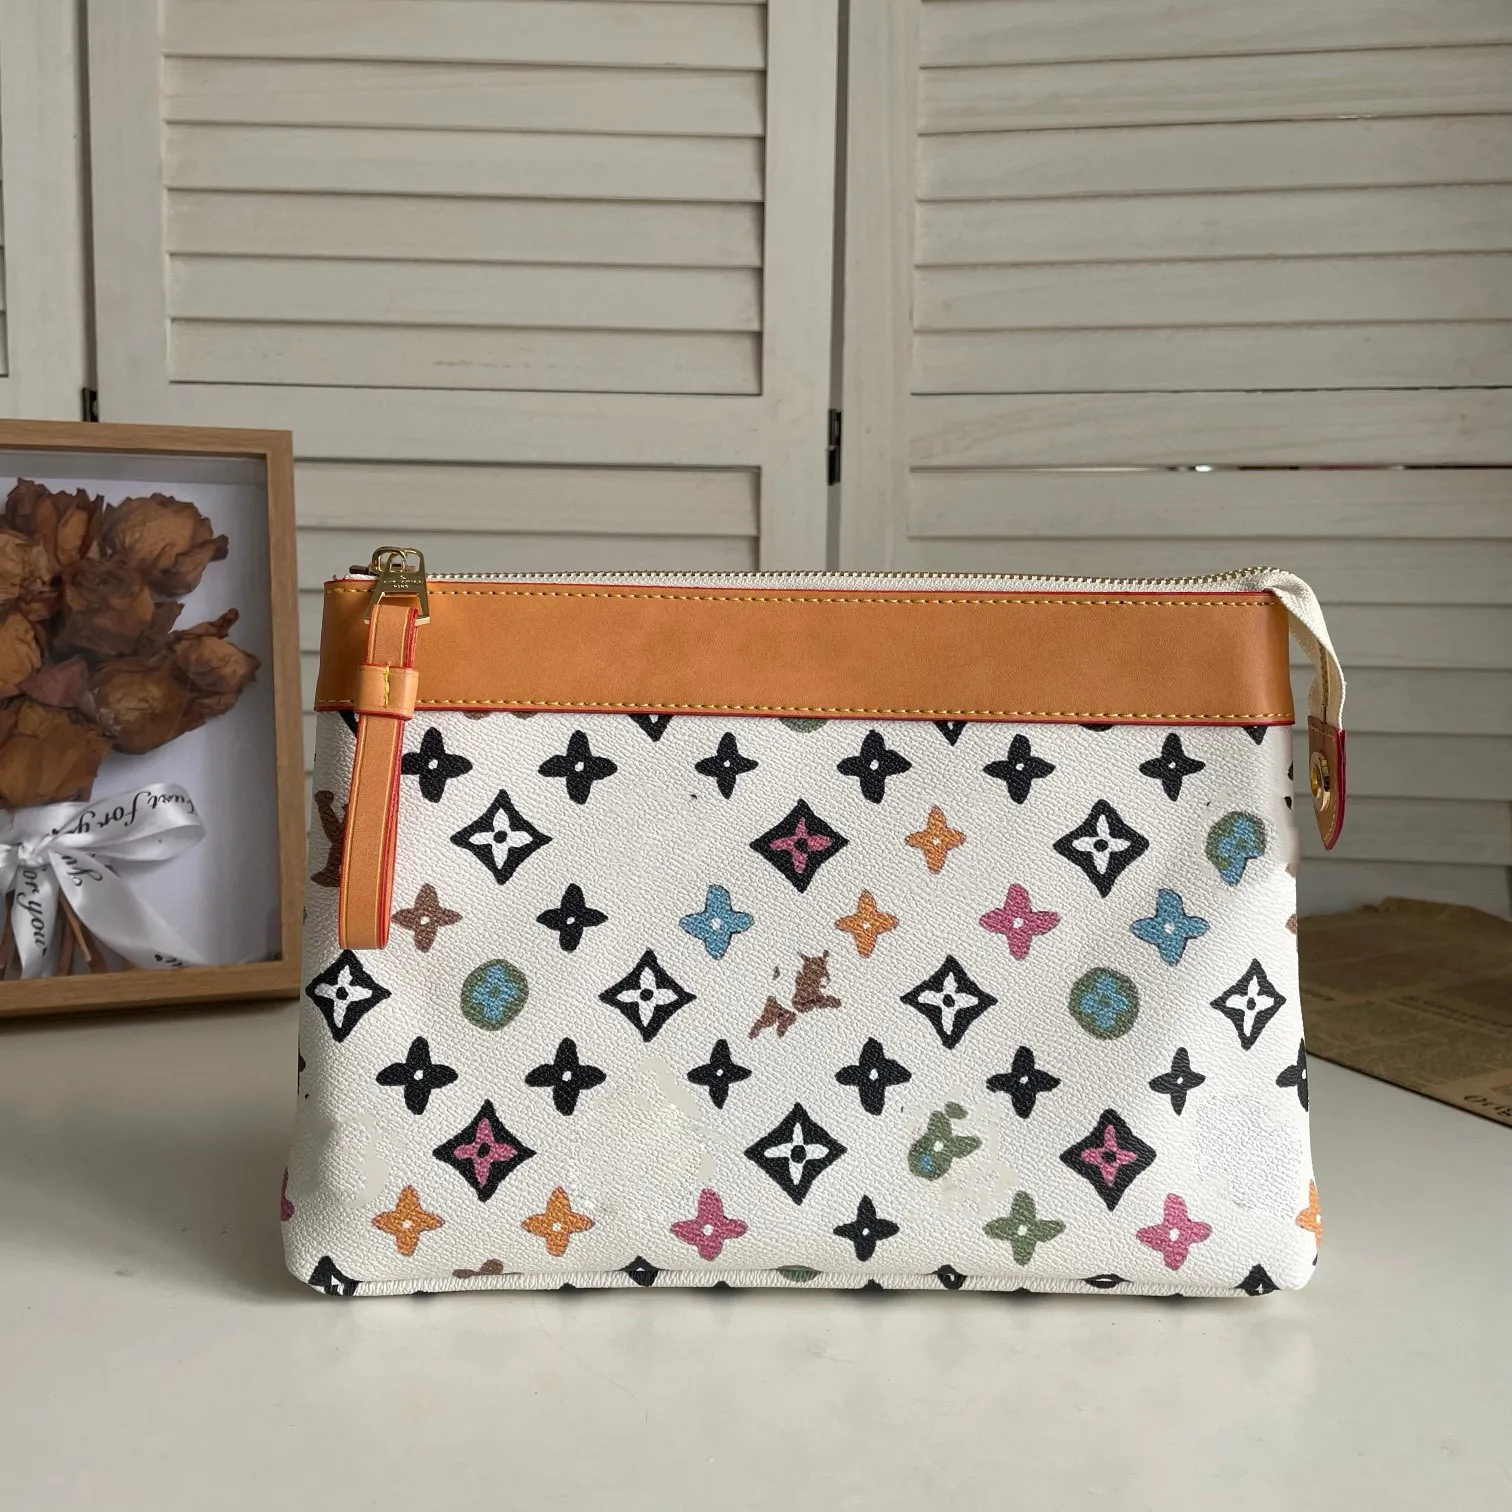 Pochette Voyage Souple Souple Discovery Weistpack Designer Bag حقيبة يدوية الحليب الشوكولاتة الرسوم المتحركة على طراز حقيبة جلدية غير رسمية حقيبة الكتف